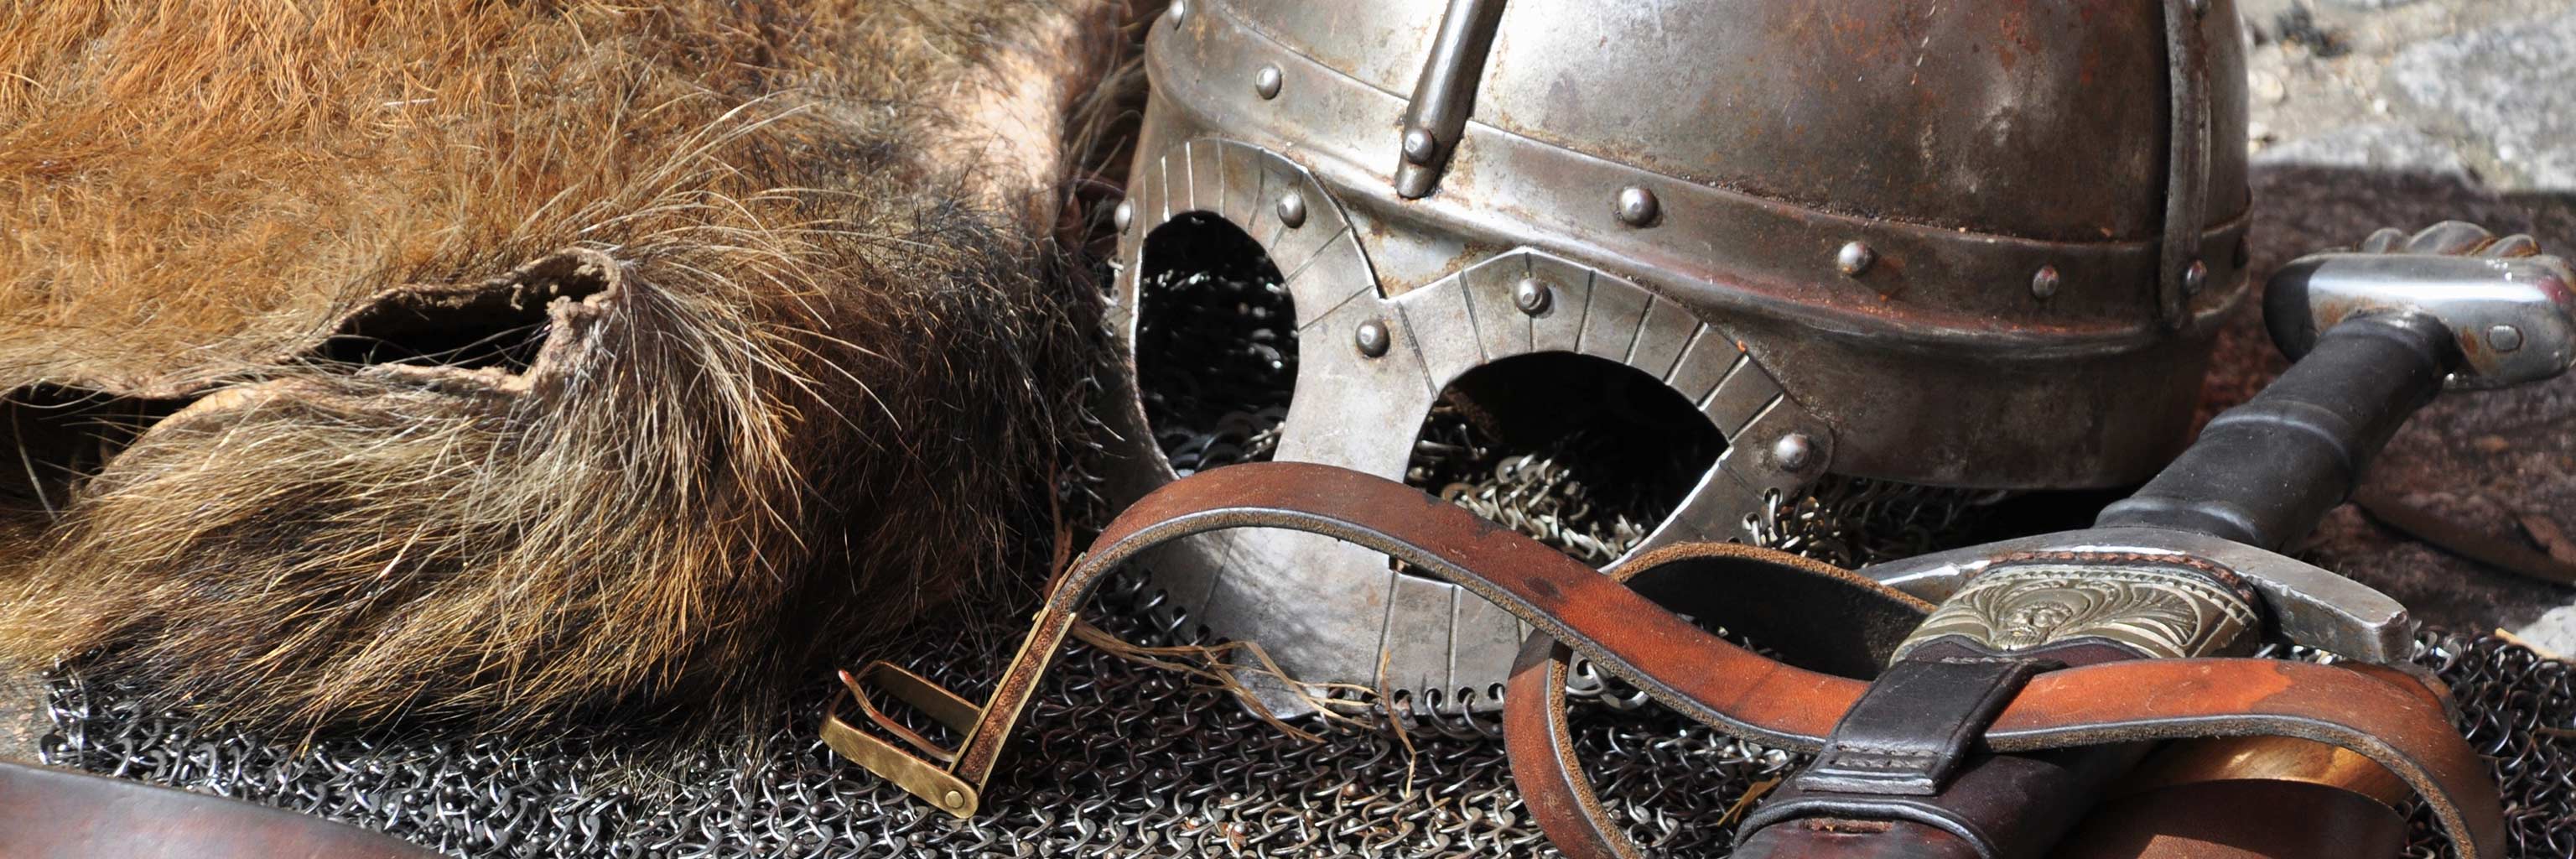 Medieval armor, sword and helmet